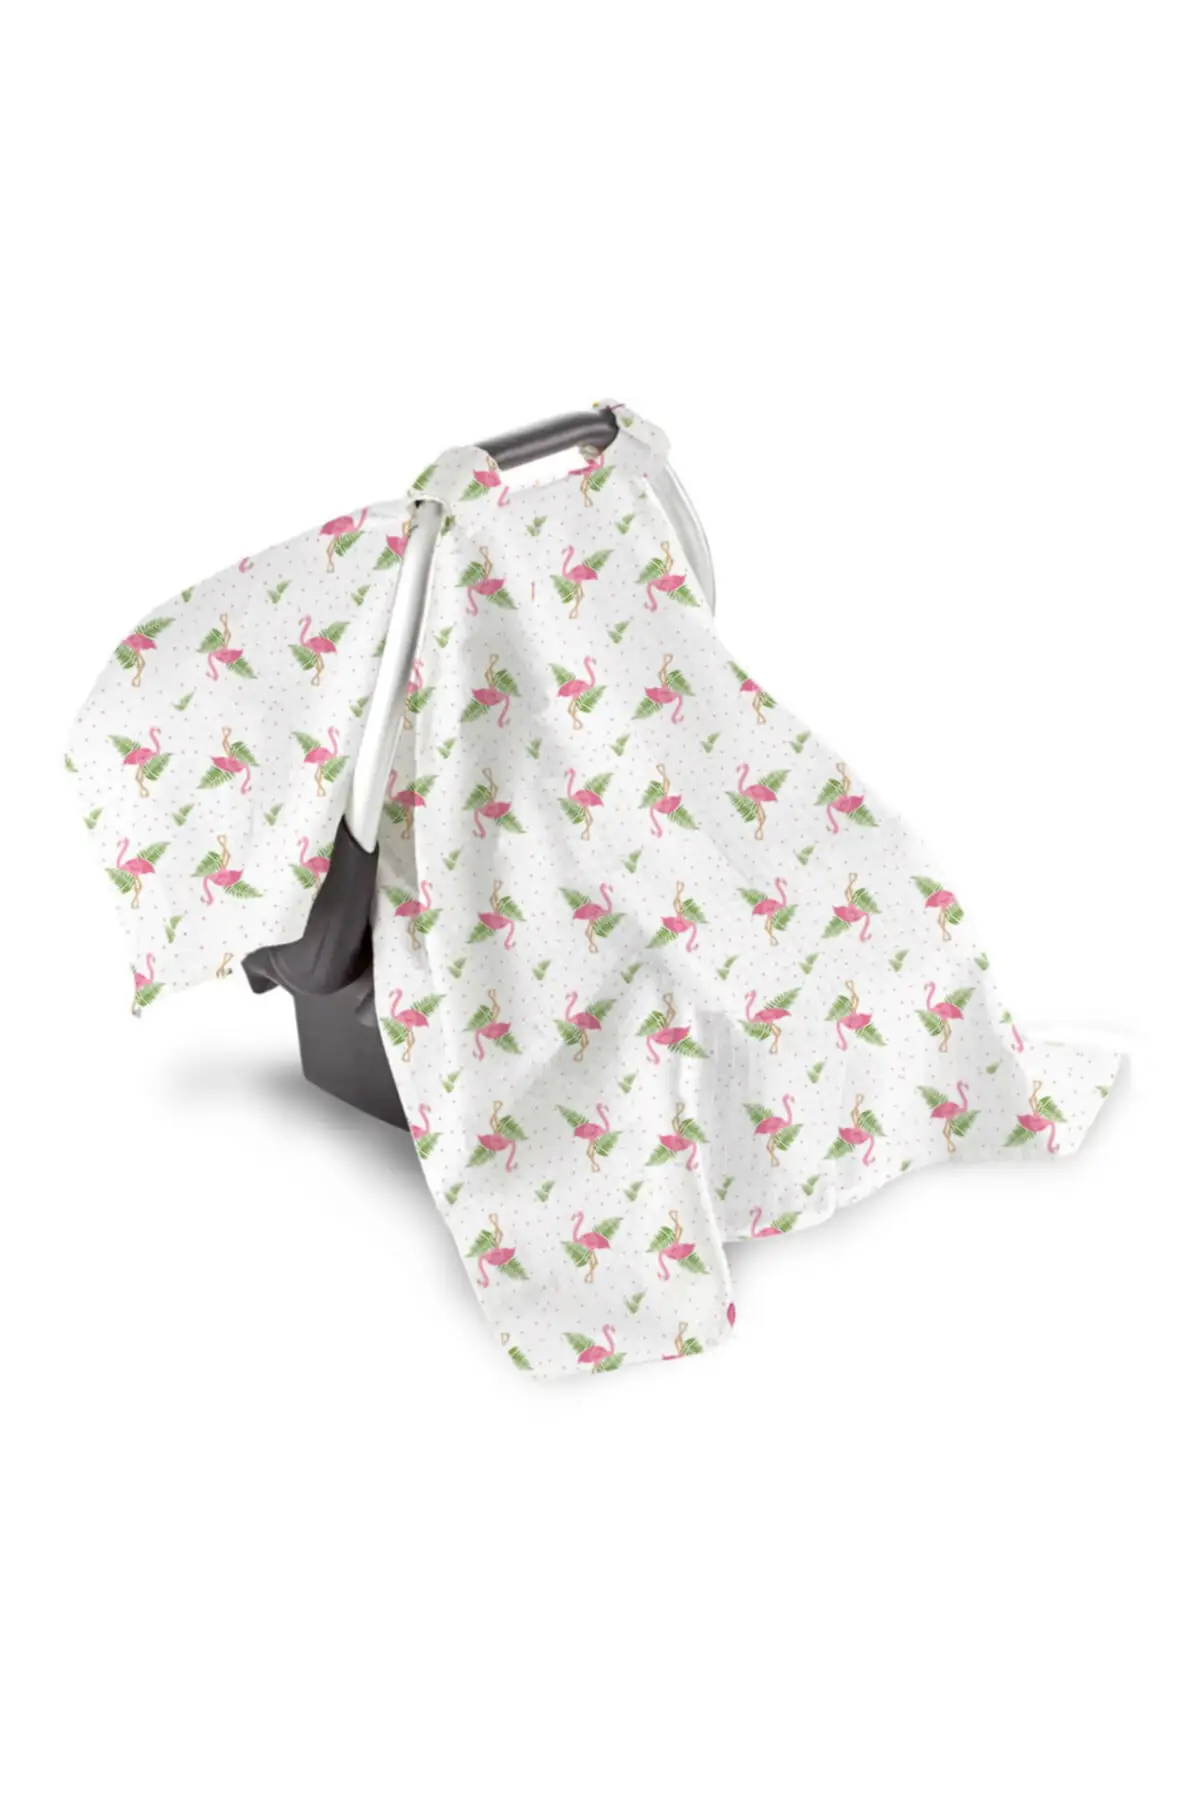 Müslin Stroller Cover Flamingo Cloth Baby Clothing